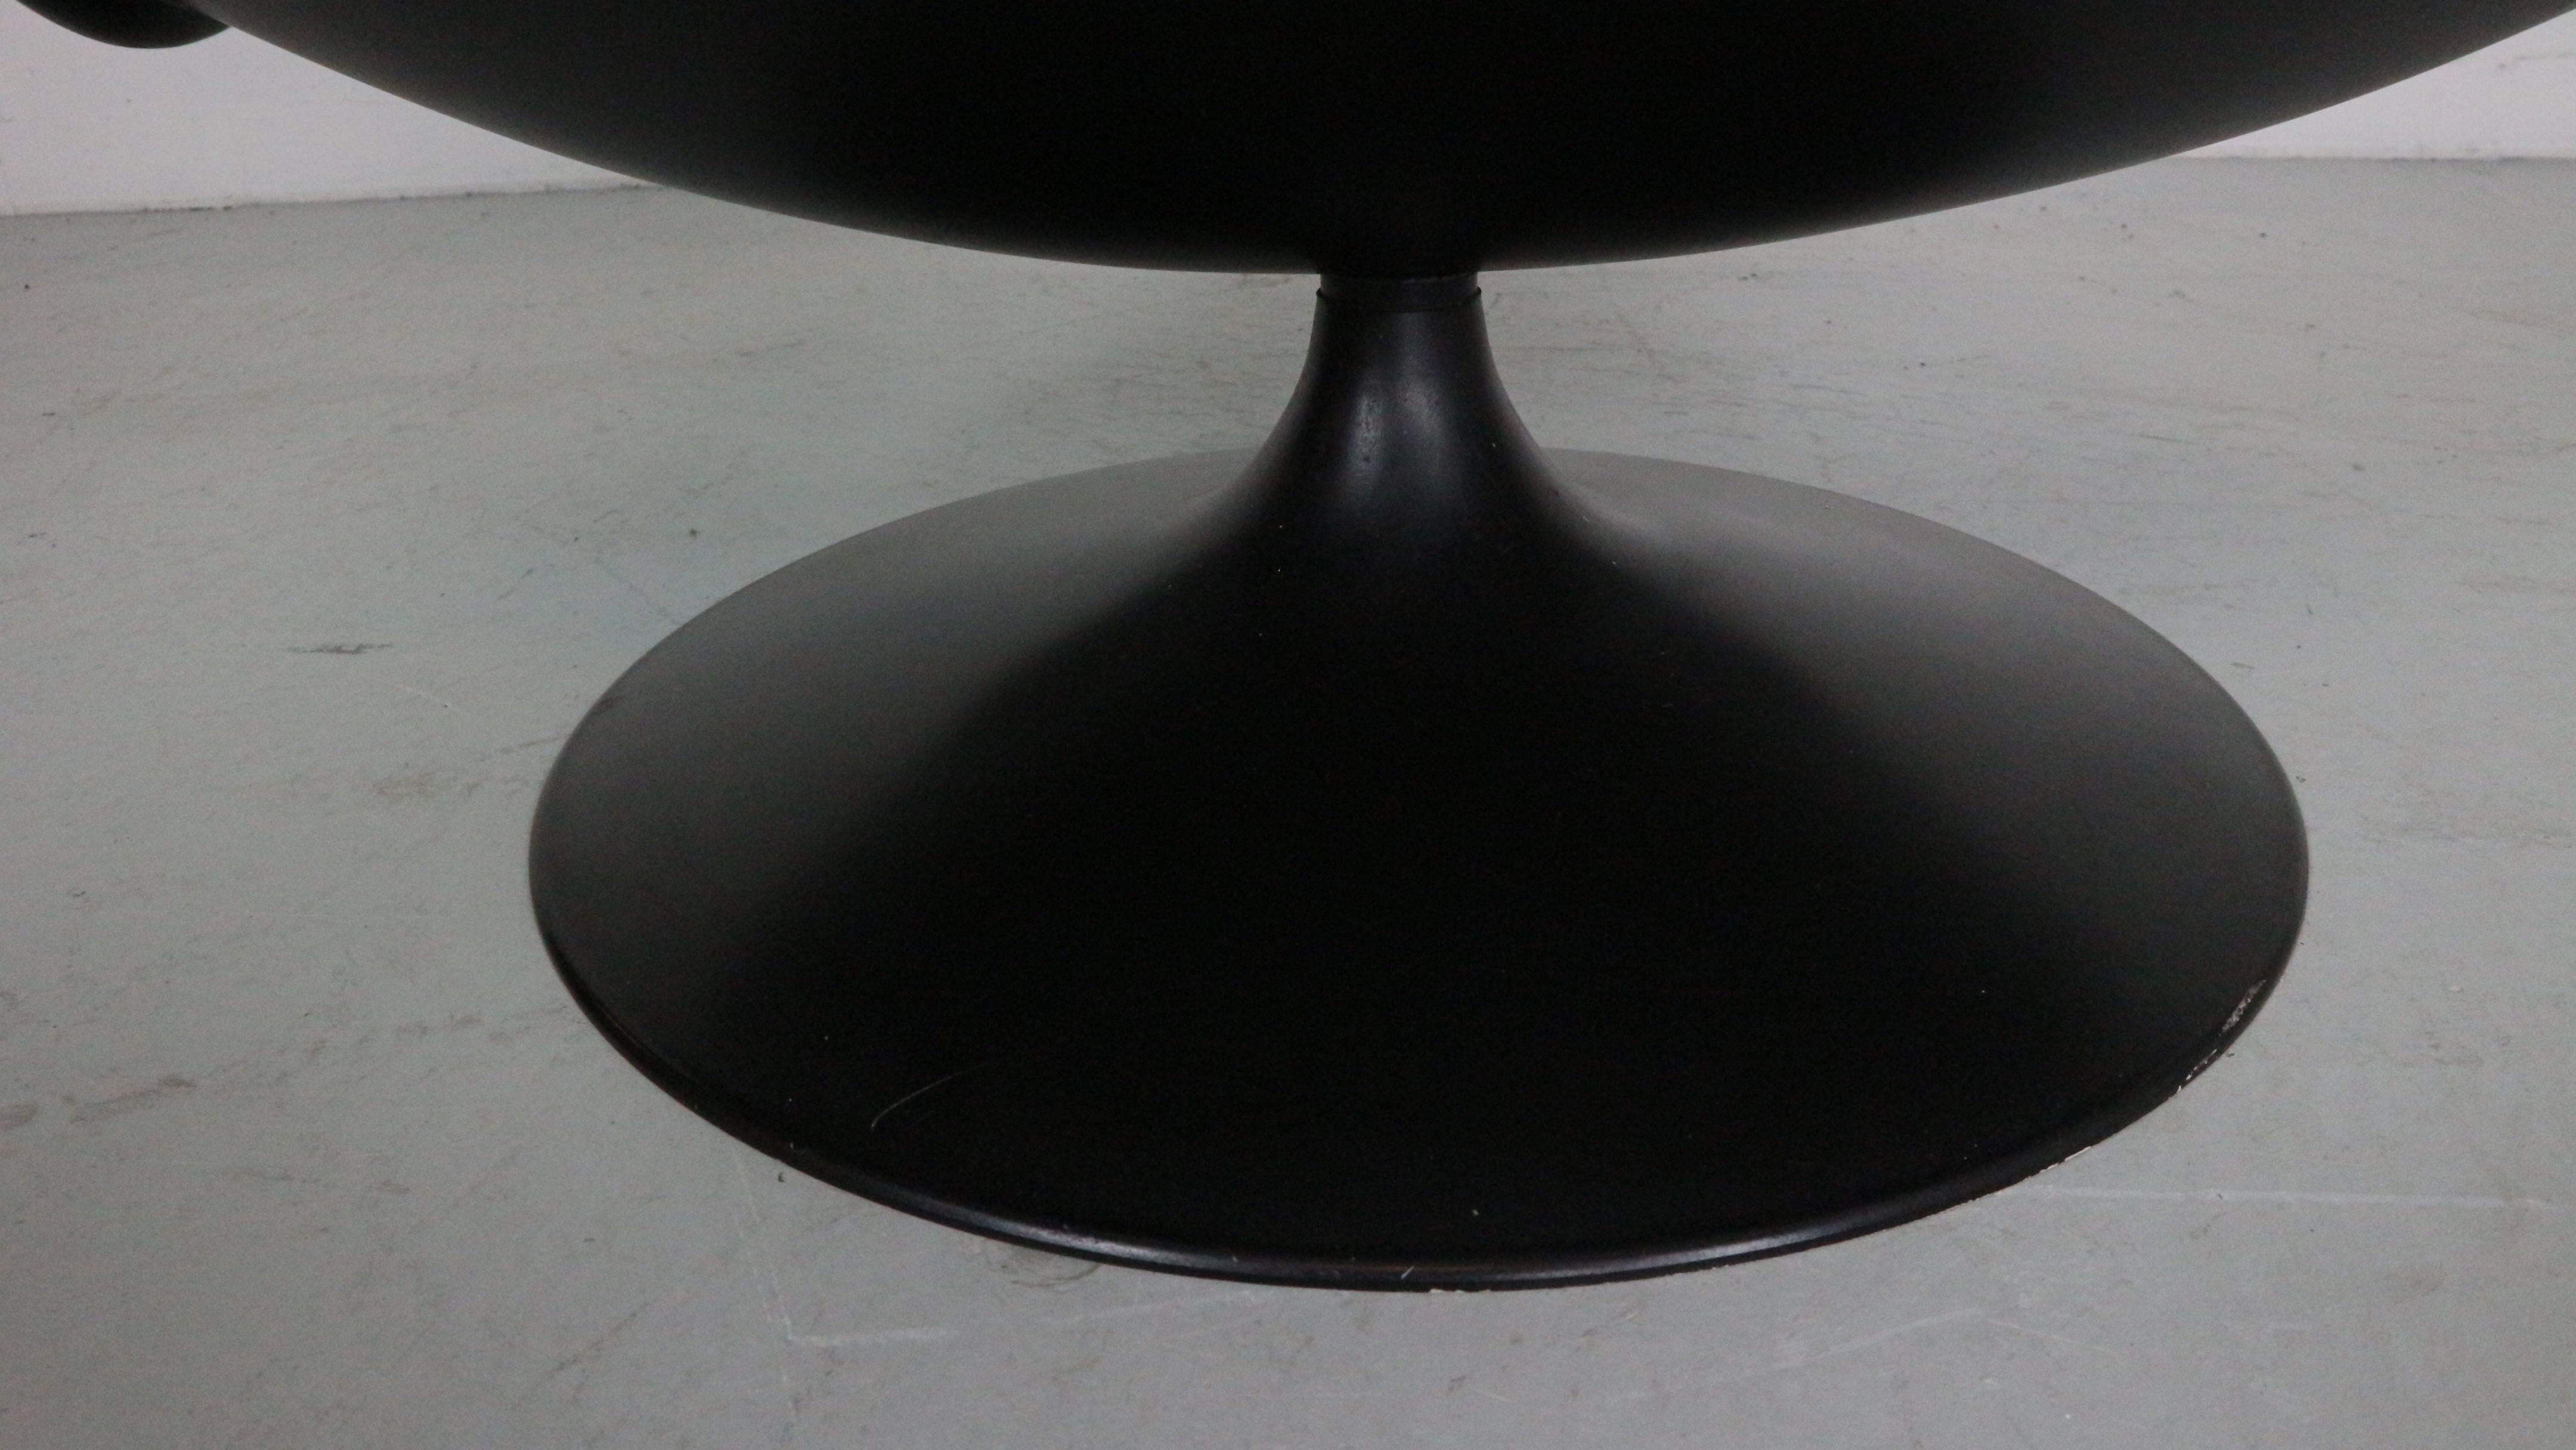 Geoffrey Harcourt Swivel Black Leather Lounge Chair- 